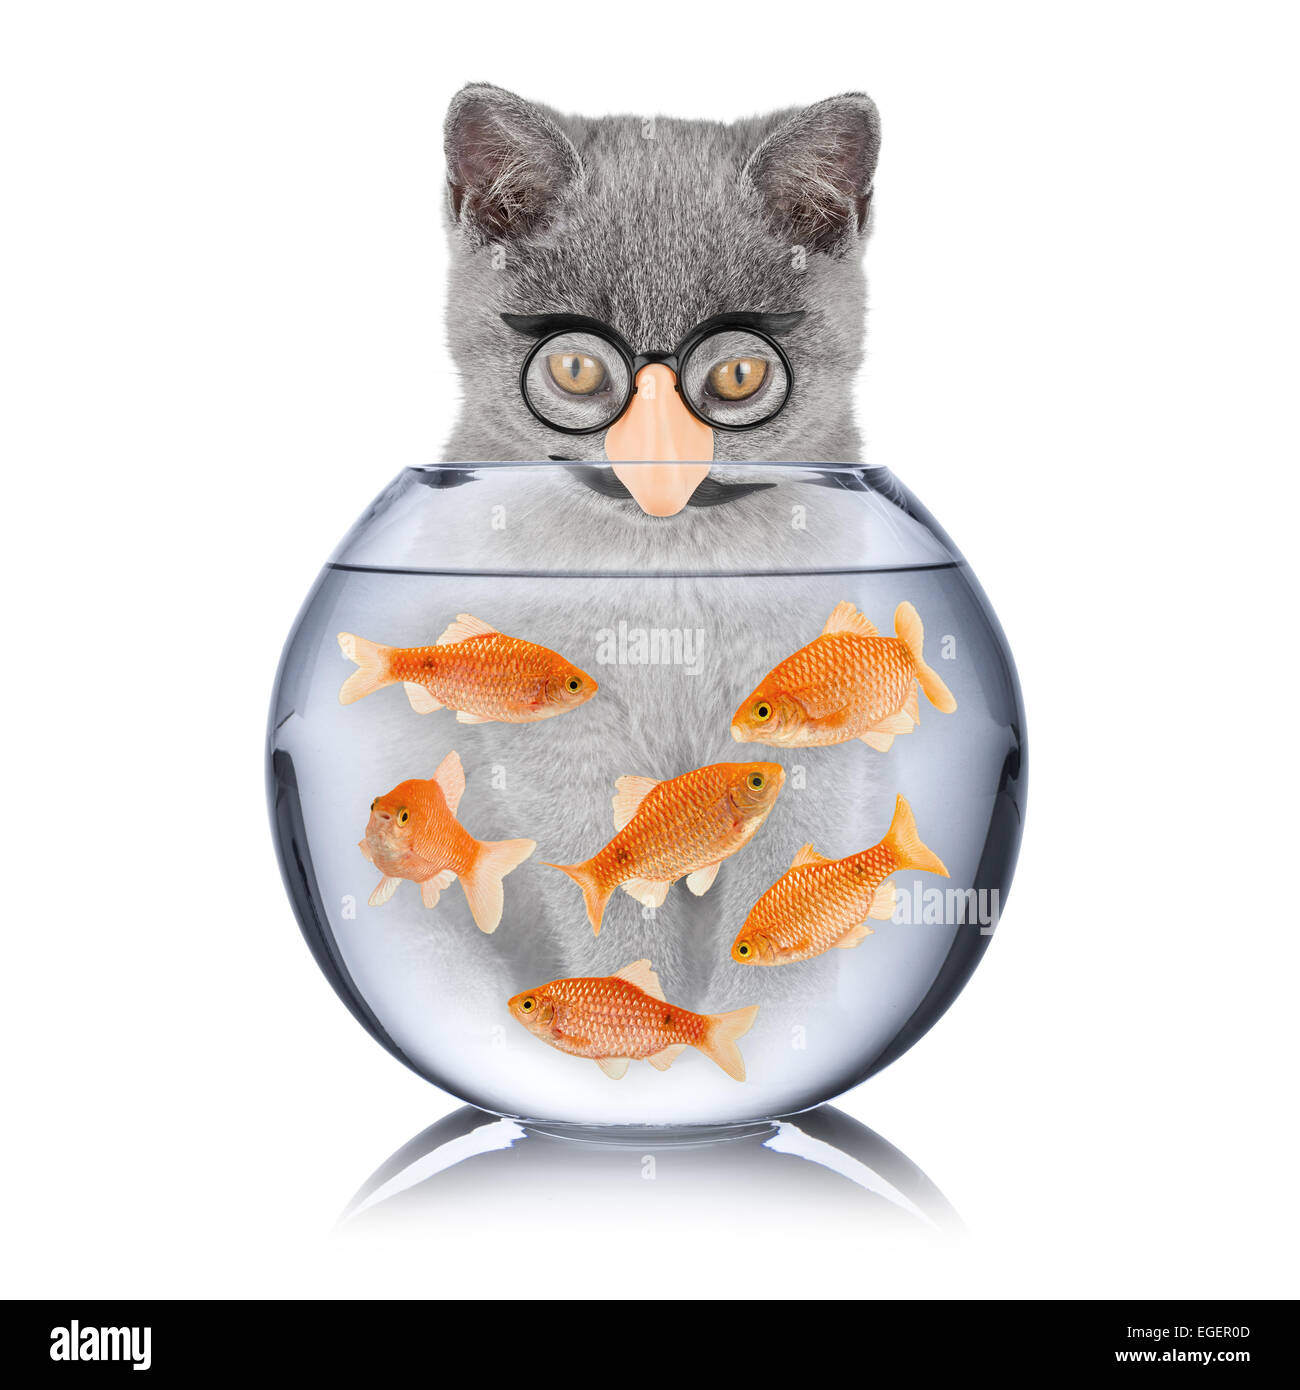 Katze mit falsche Nase Blick in Goldfischglas Stockfotografie - Alamy